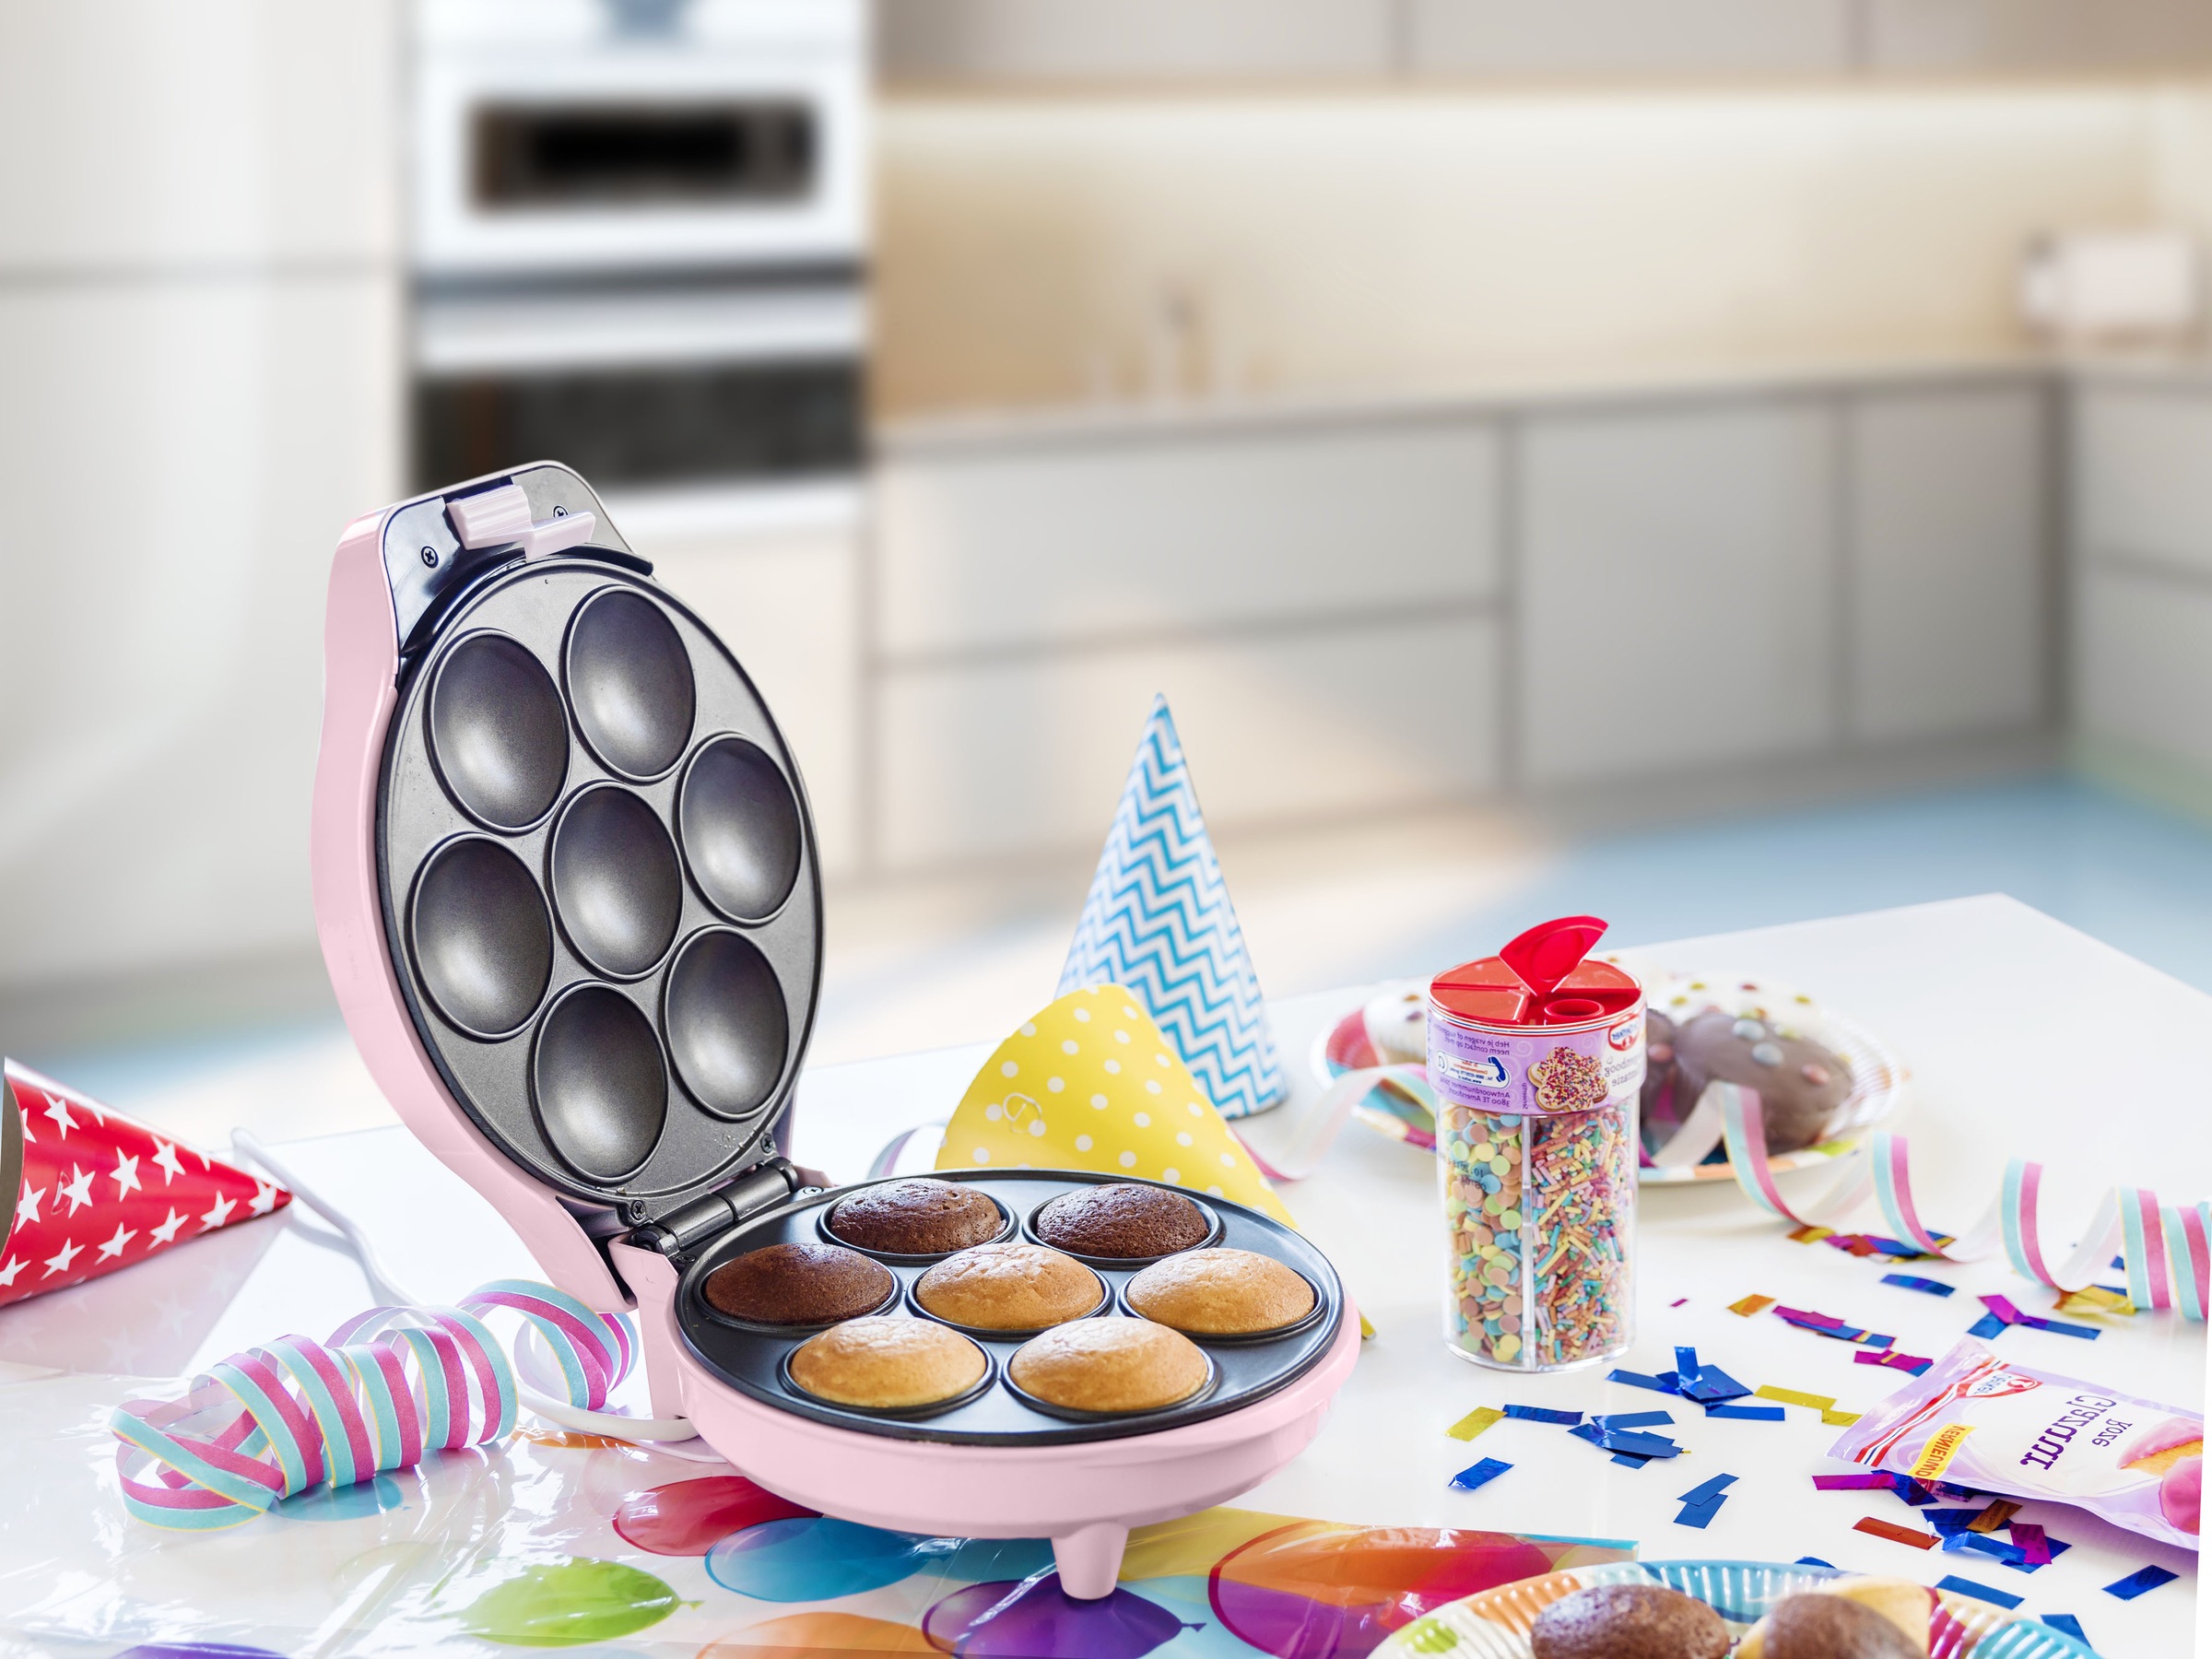 bestron Cupcake-Maker »ACC217P Sweet Dreams«, 700 W, im Retro Design,  Antihaftbeschichtung, Rosa jetzt bestellen bei OTTO